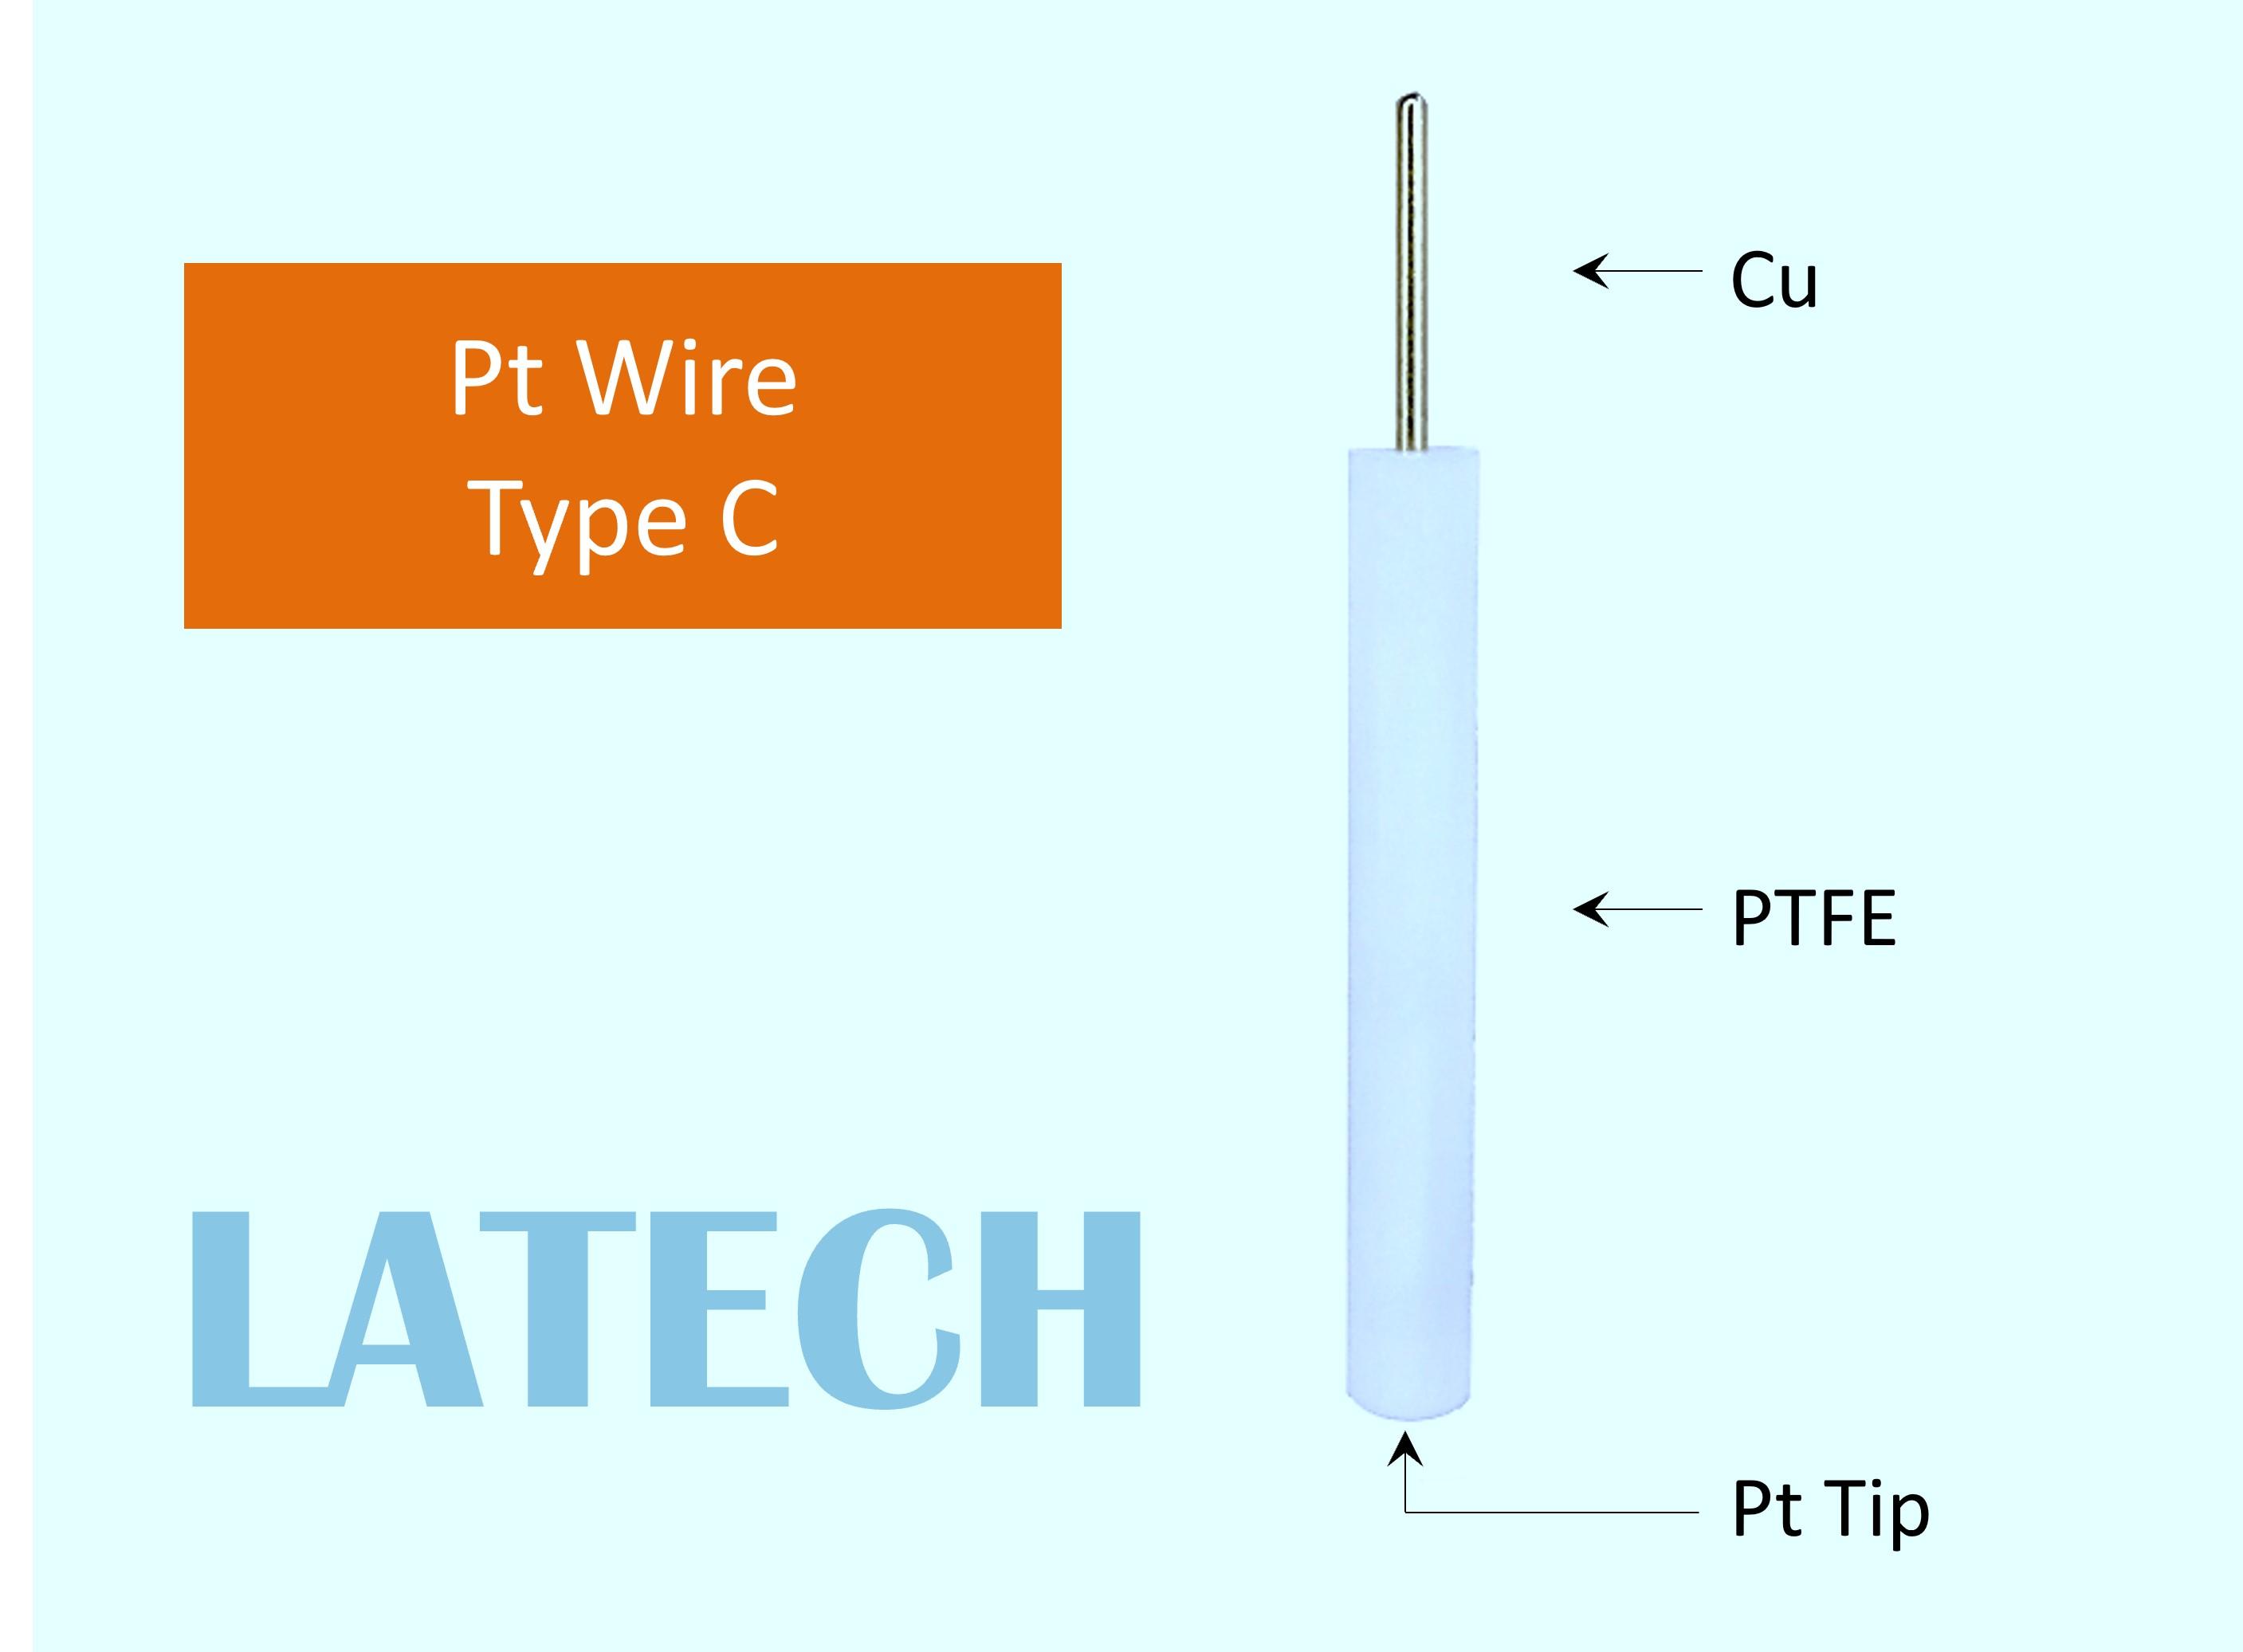 Pt wire Type C Latech.jpg